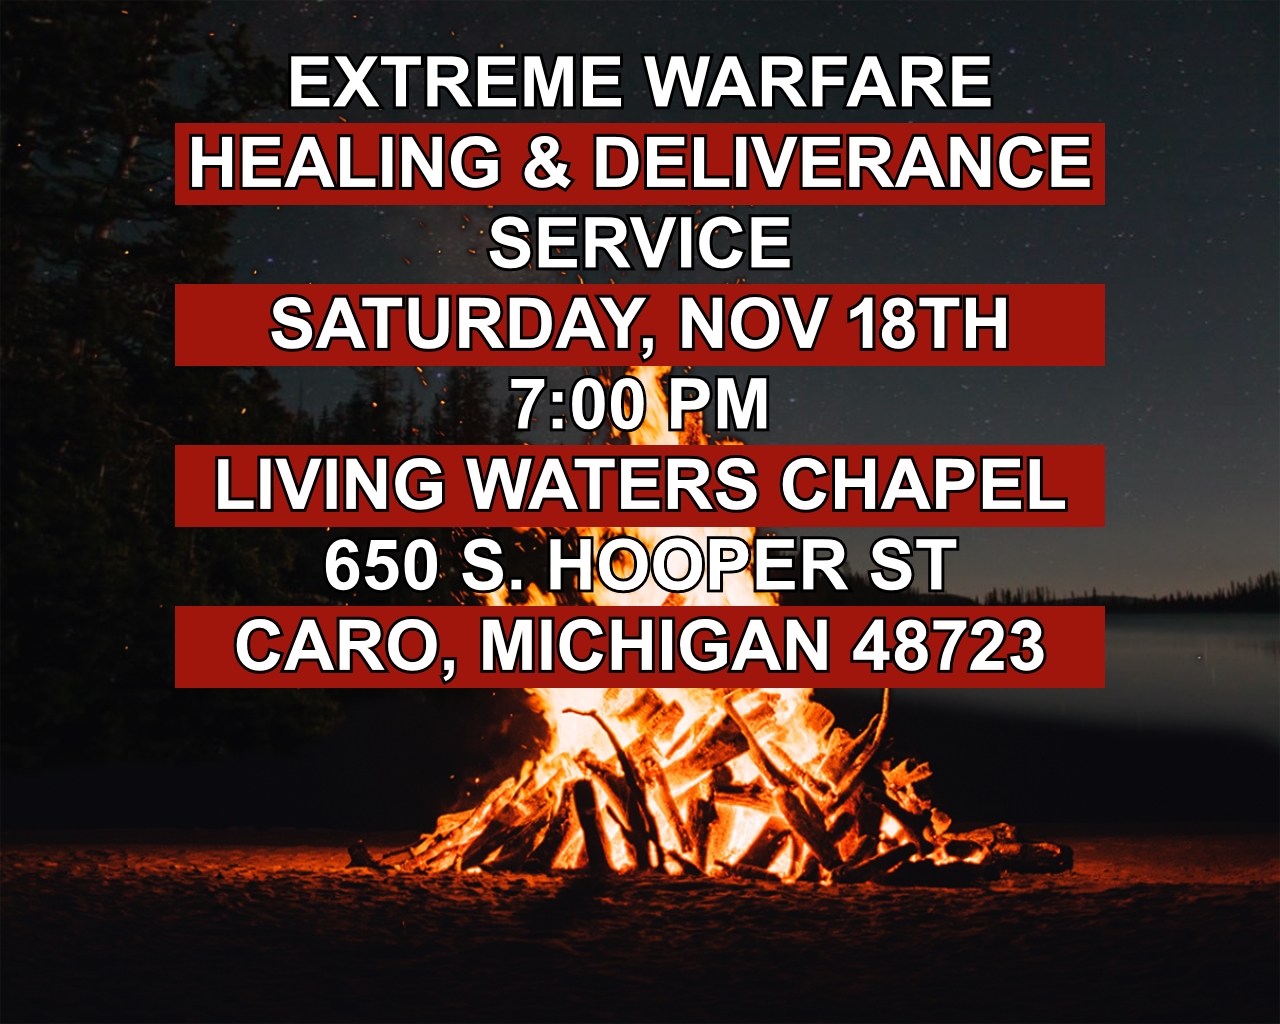 Extreme Warfare Healing & Deliverance Service